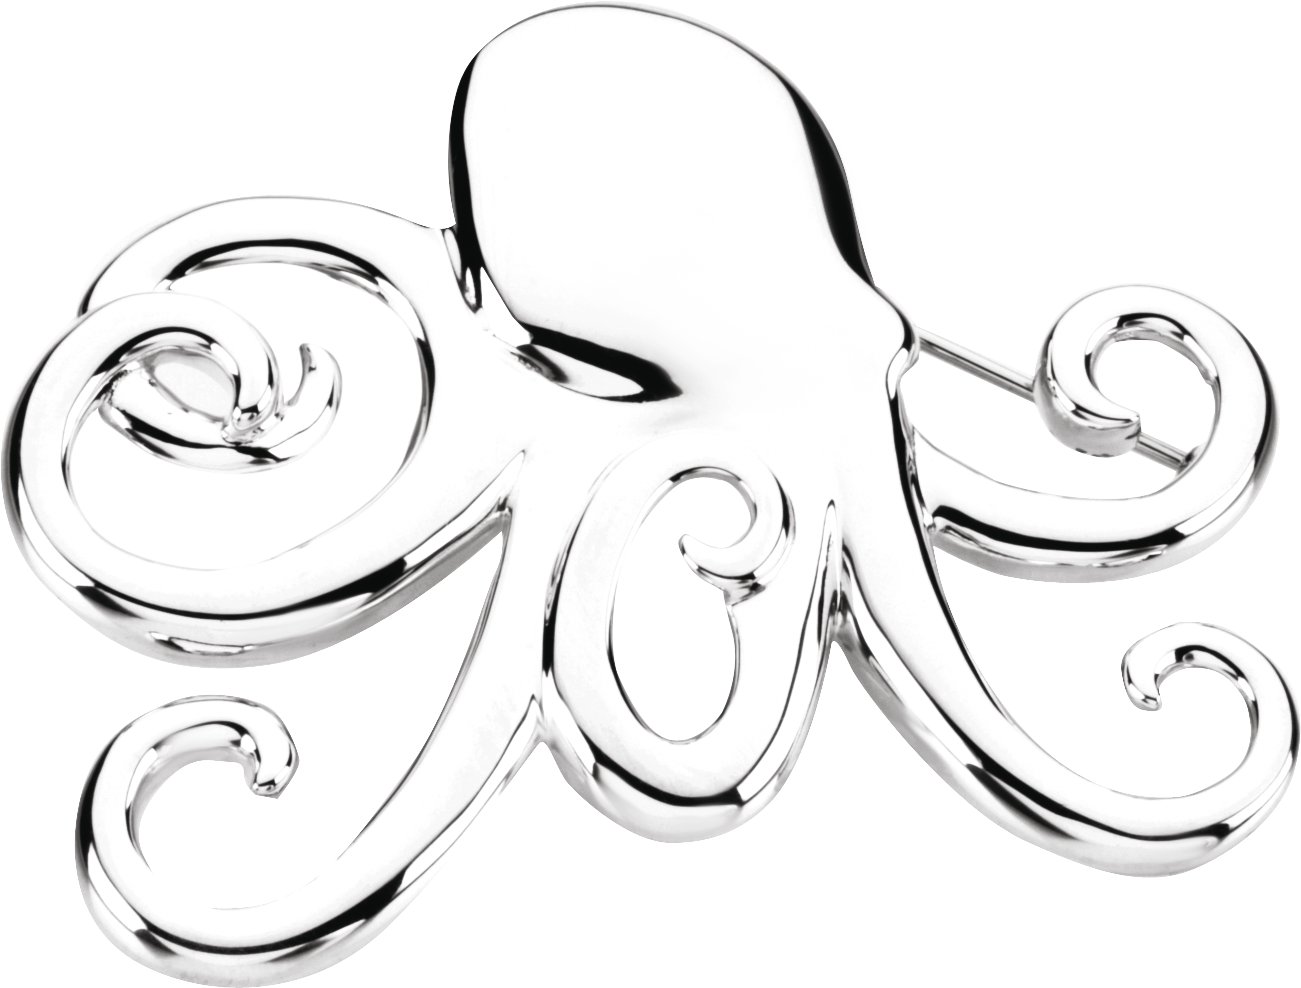 Sterling Silver Octopus Brooch or Pendant